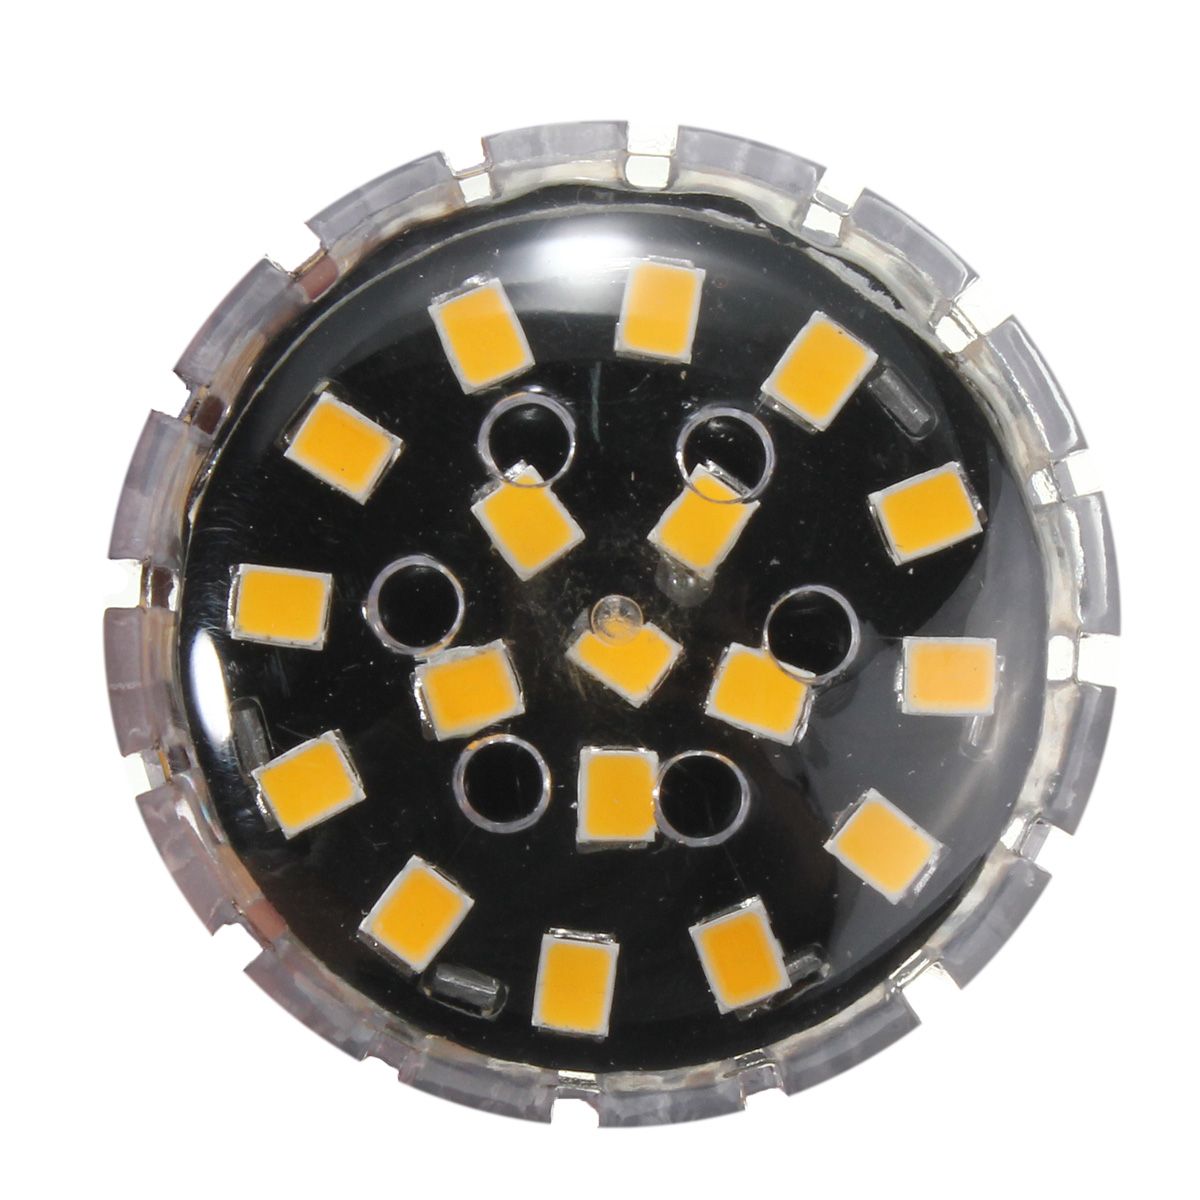 E14-B22-E27-11W-LED-2835-SMD-Warm-White--White-Cover-Corn-Light-Lamp-Bulb-Non-Dimmable-AC-220V-1035834